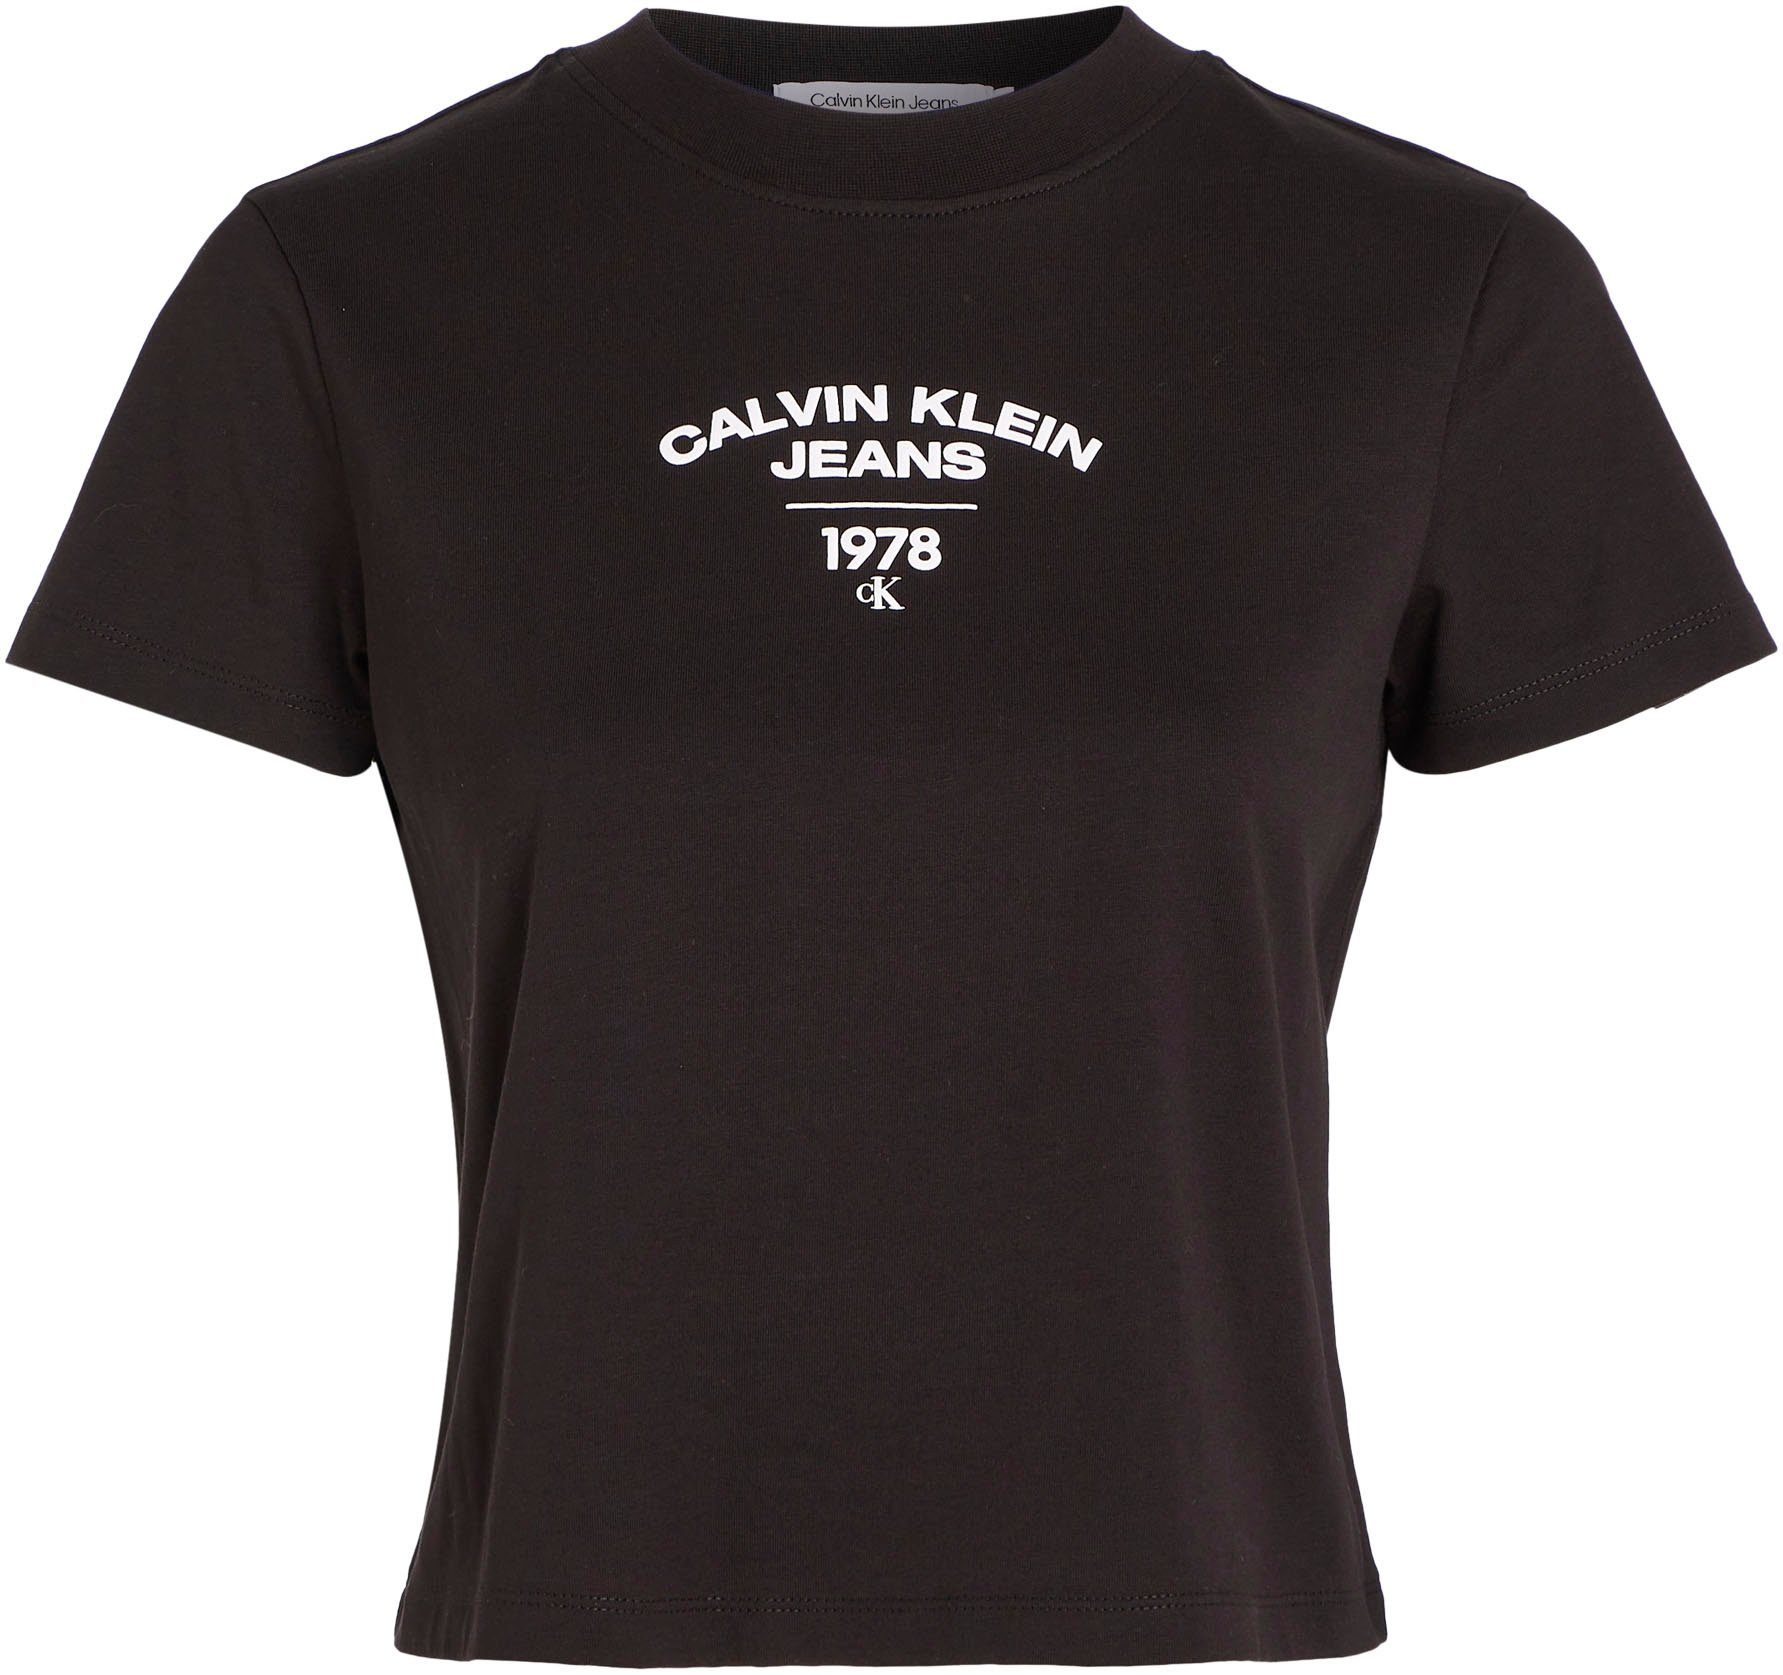 TEE Ck BABY Jeans Calvin LOGO Black VARSITY Klein T-Shirt